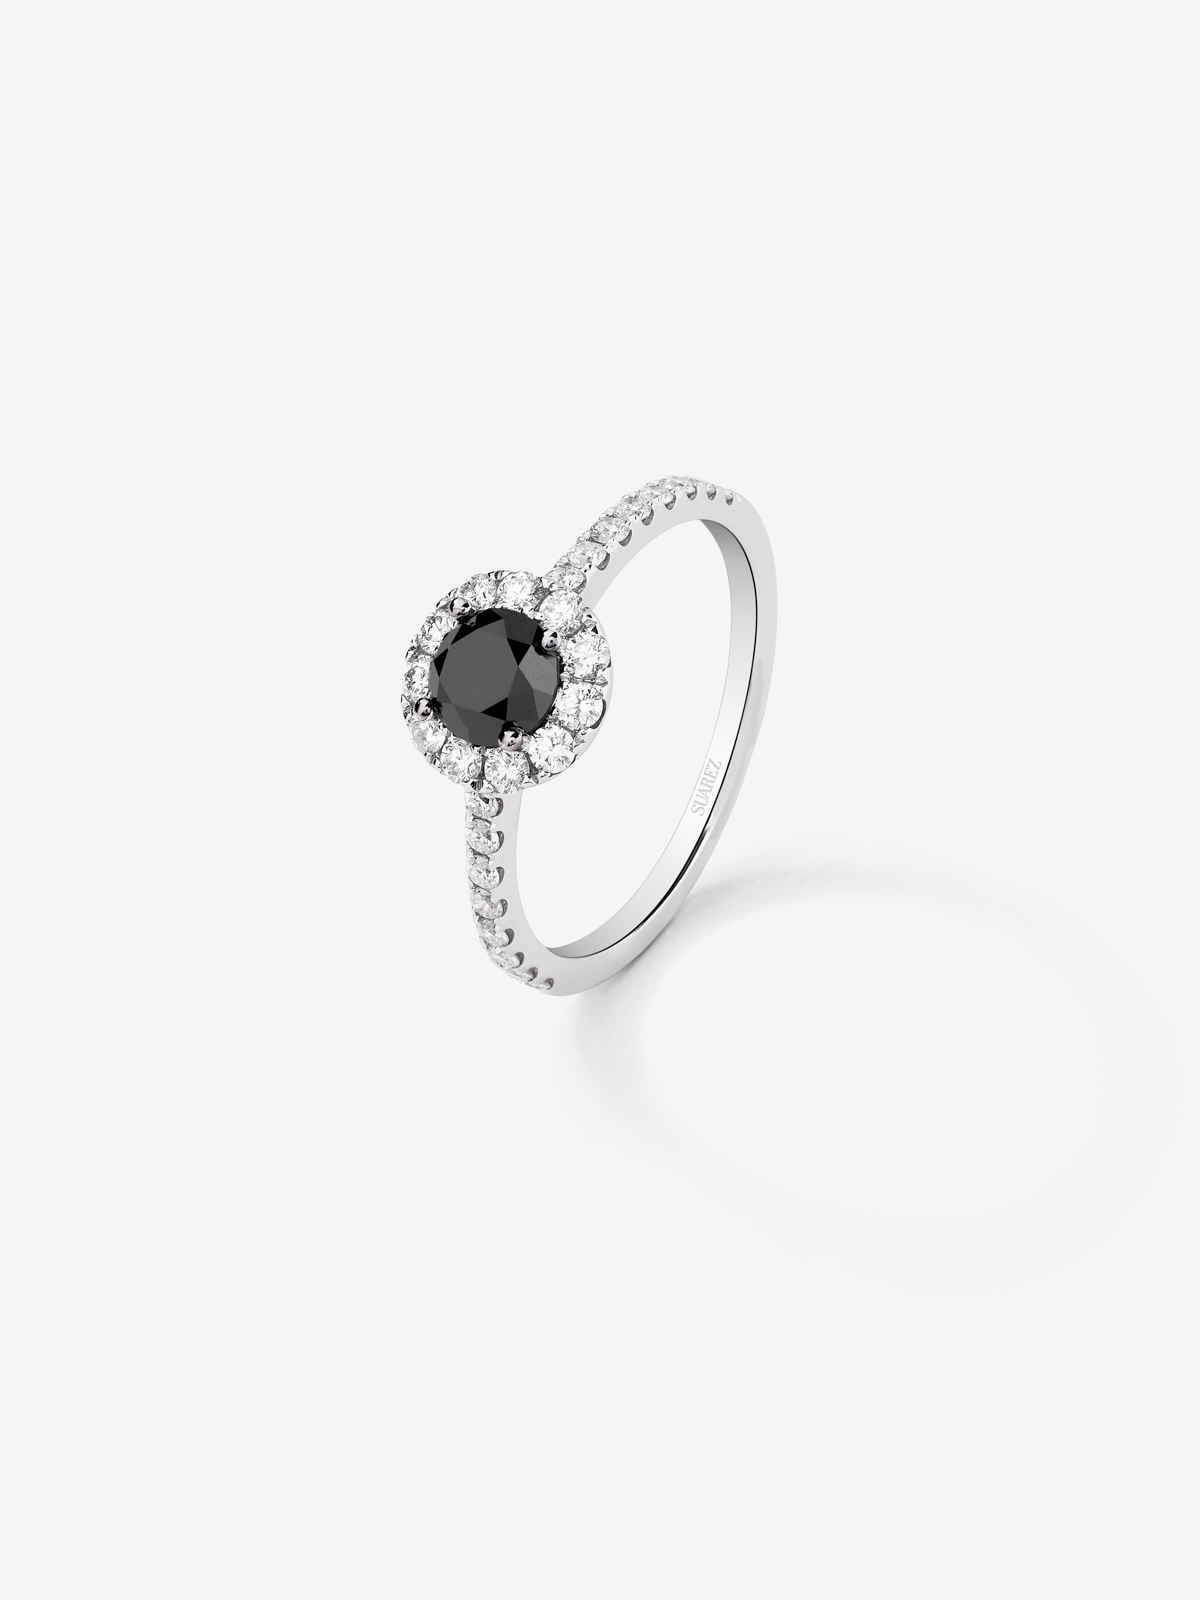 18K Gold Halo Ring with Black Diamond and White Diamond